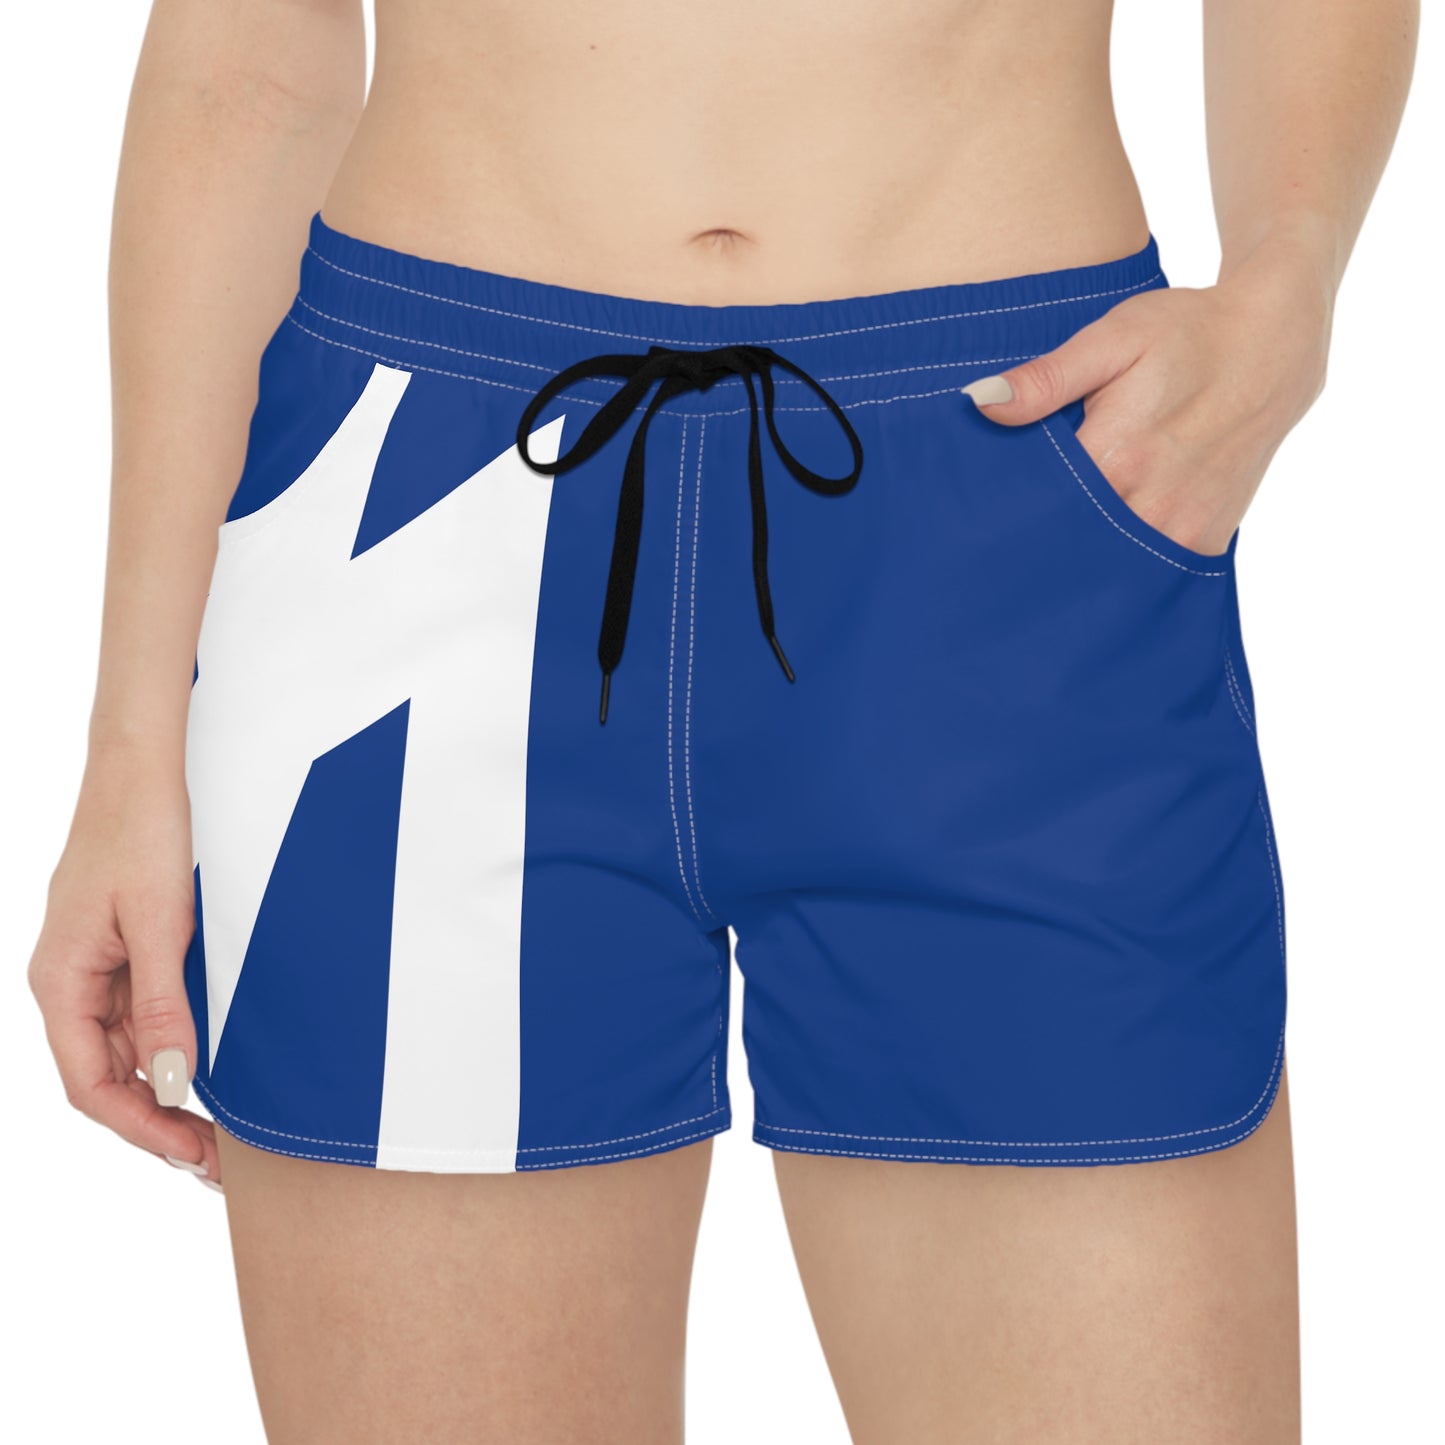 Women's Casual Shorts(Dark blue)